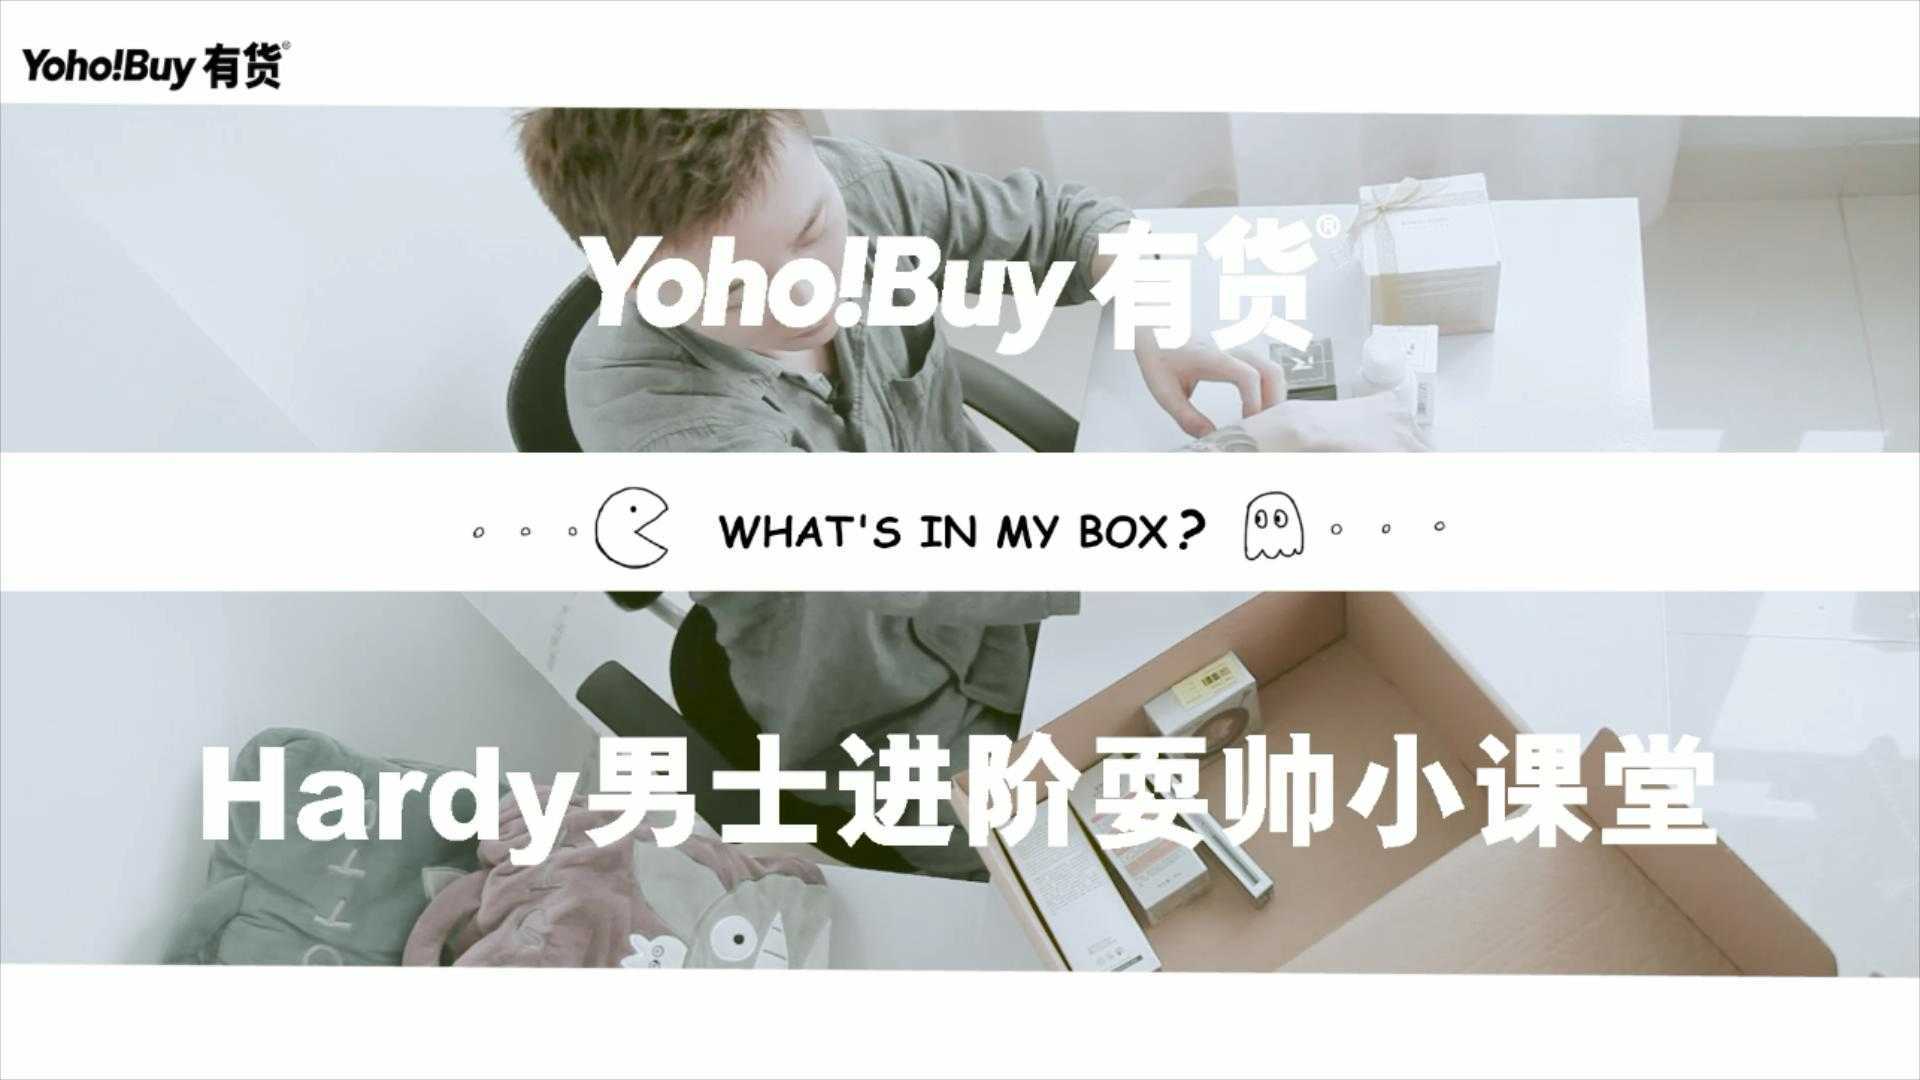 Yoho!Buy有货丨Hardy男士进阶耍帅小课堂 2017.06美妆宣传片